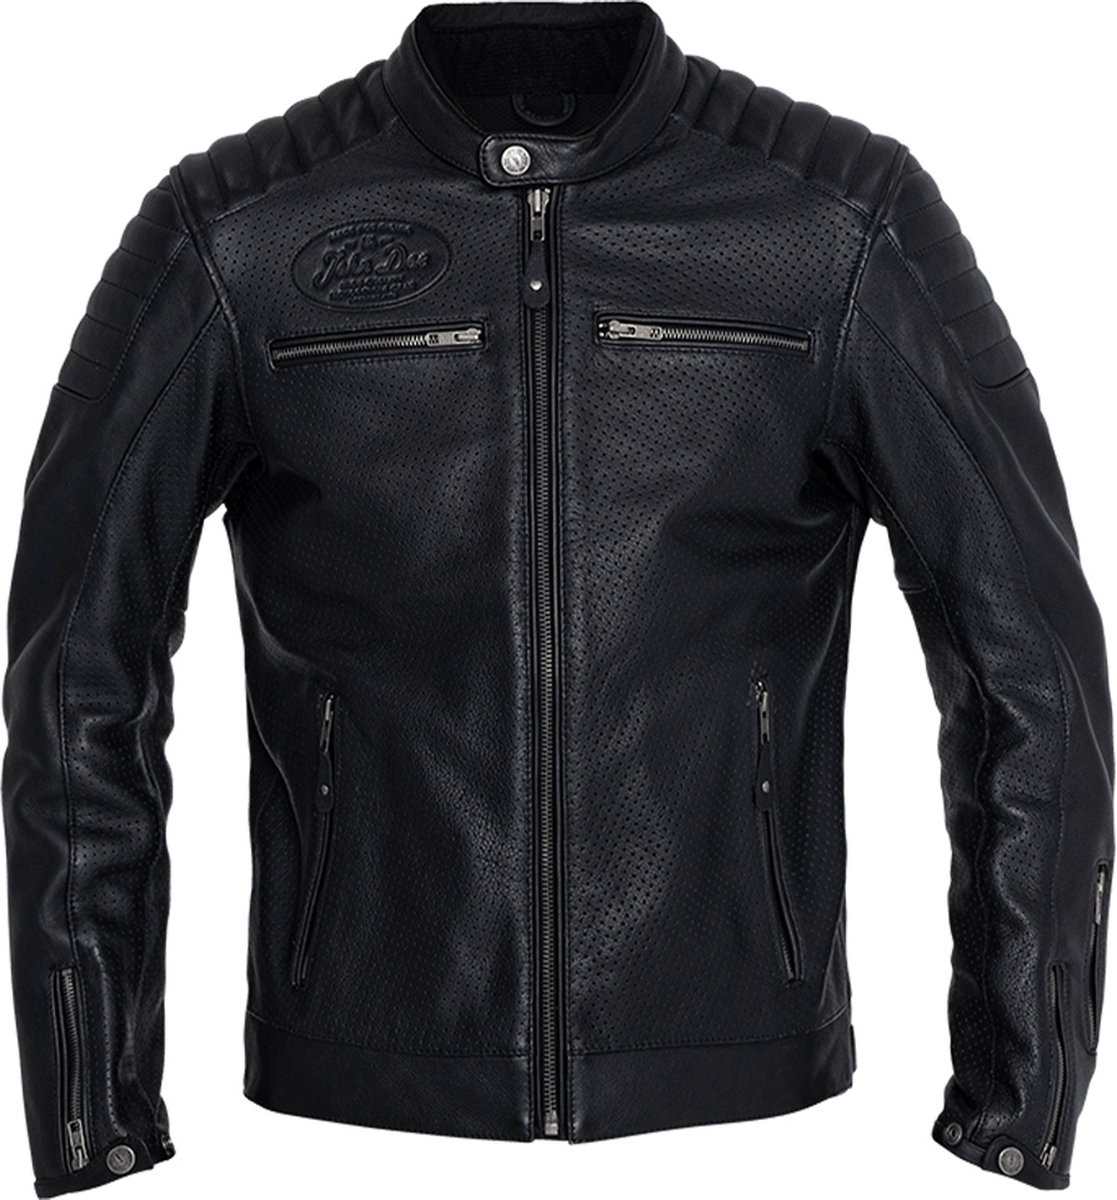 John Doe Leather Jacket Storm Black S - Maat - Jas